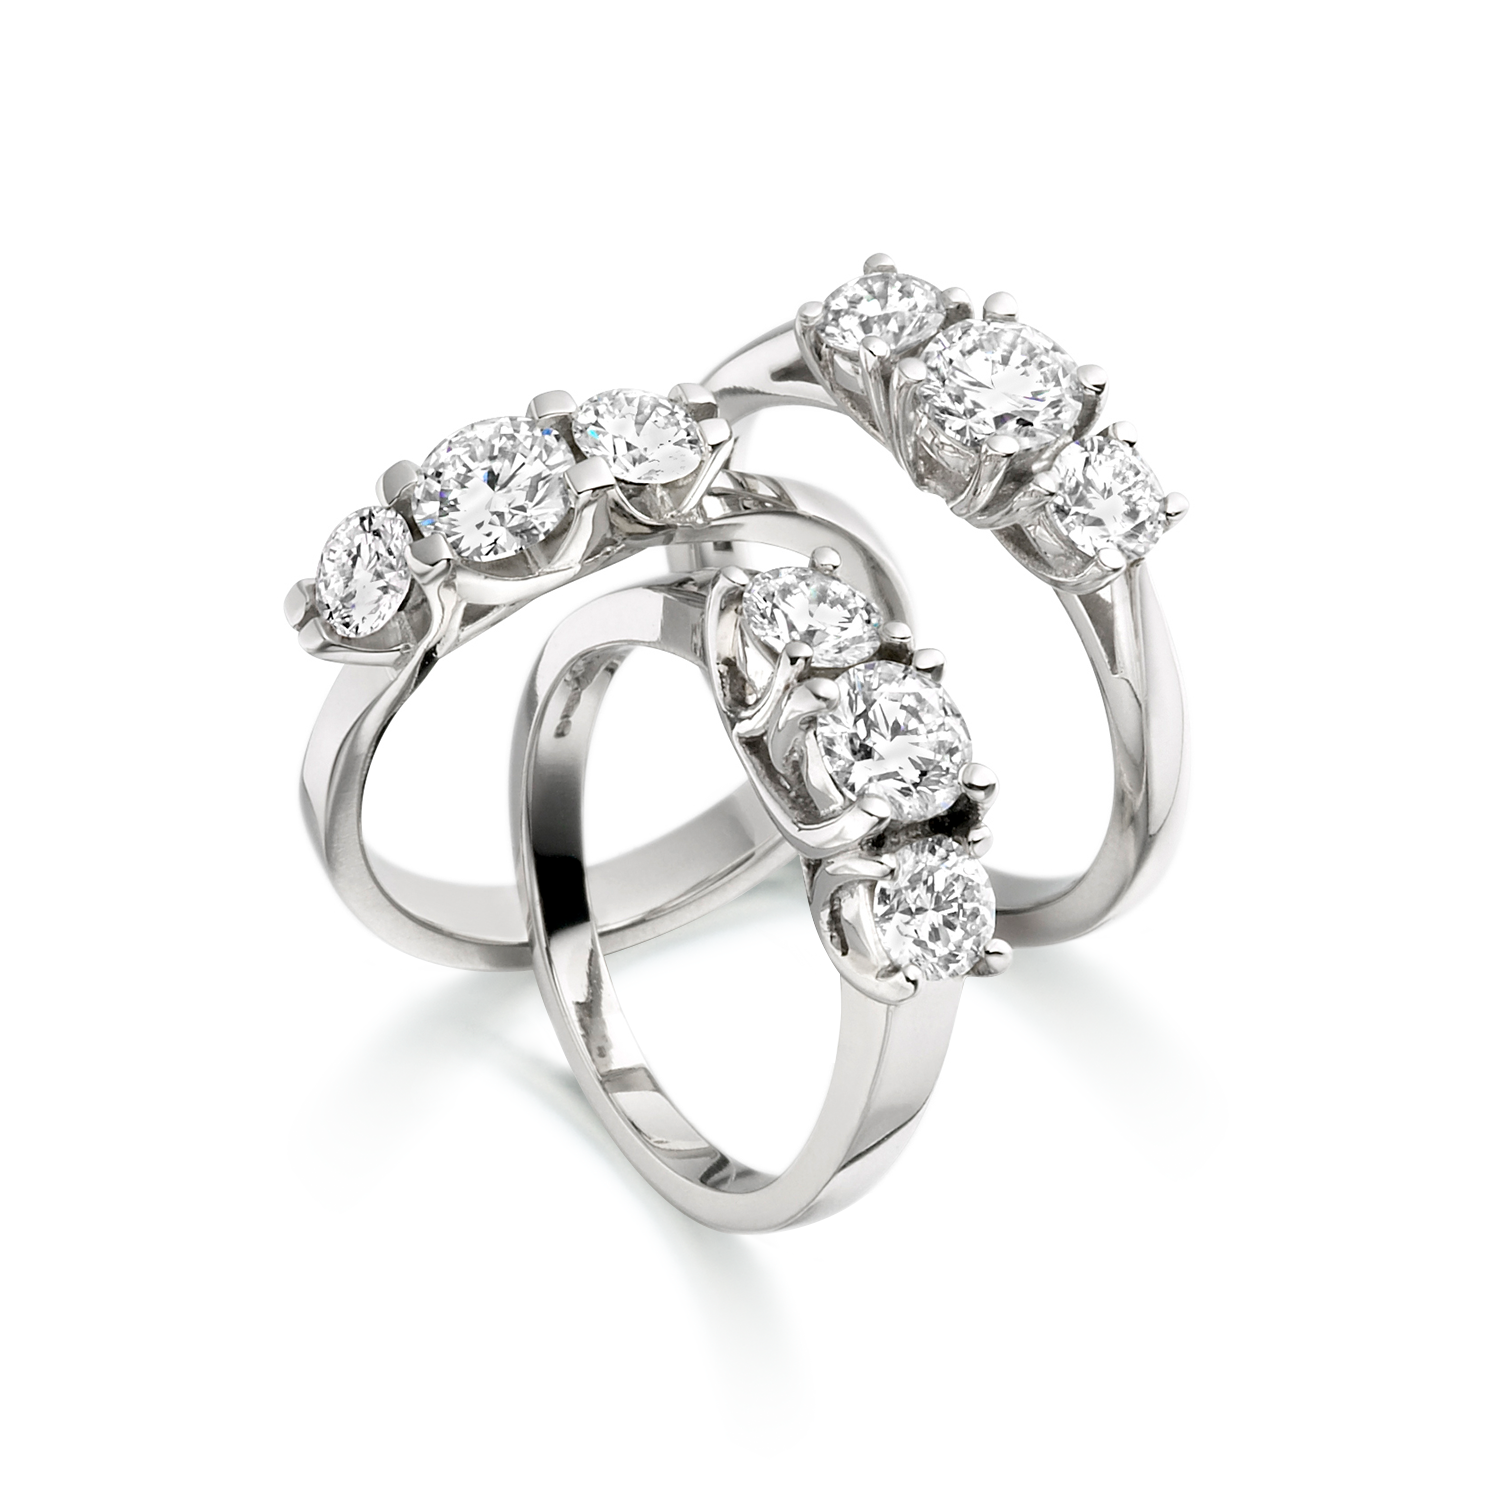 Three stone brilliant cut diamonds rings